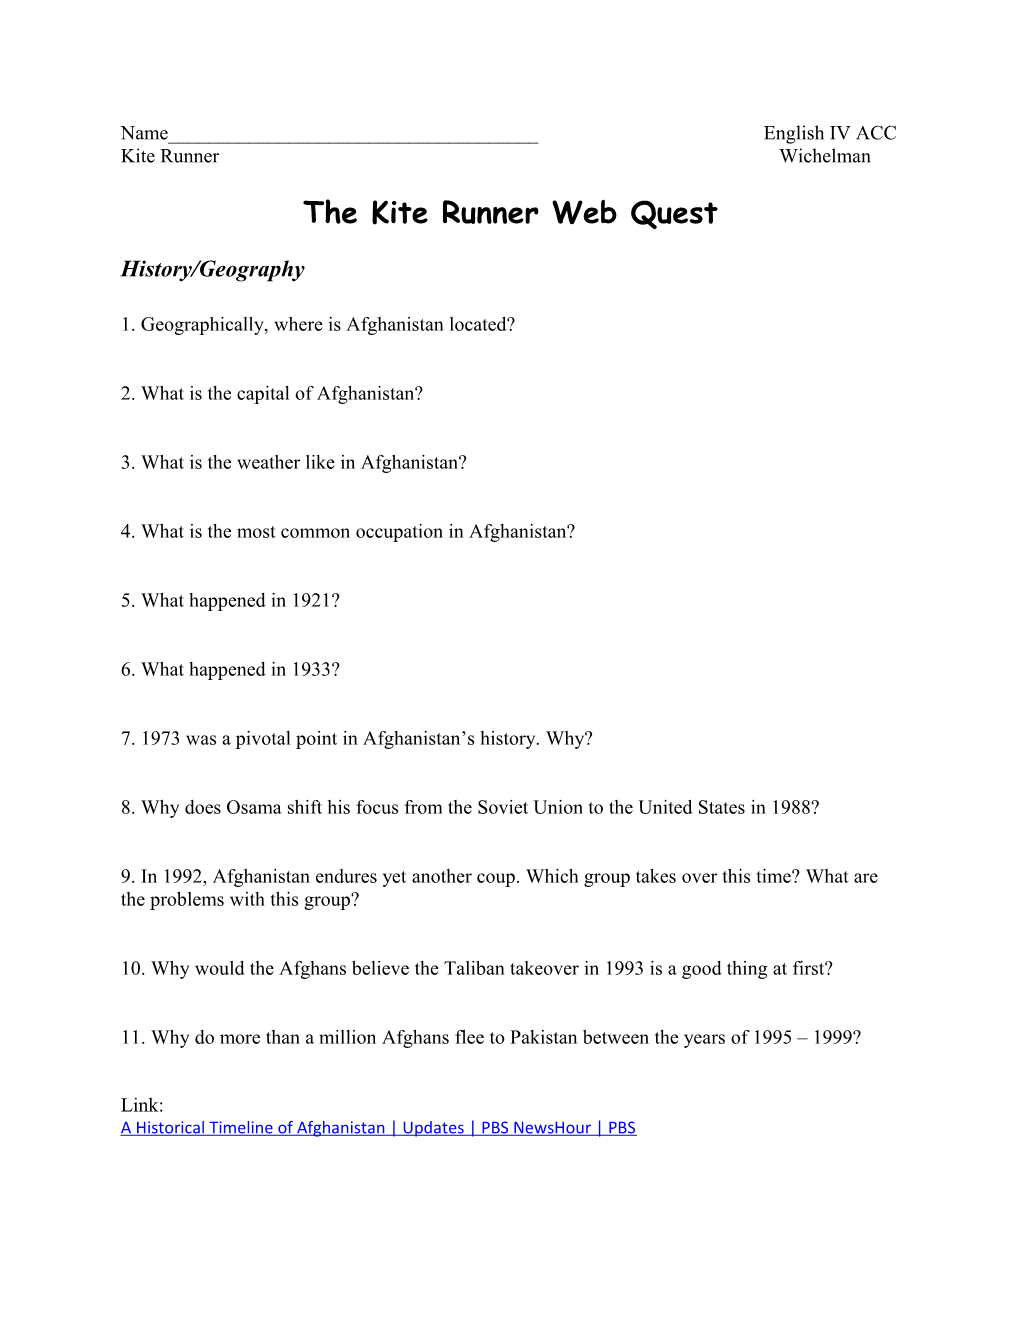 The Kite Runner Web Quest